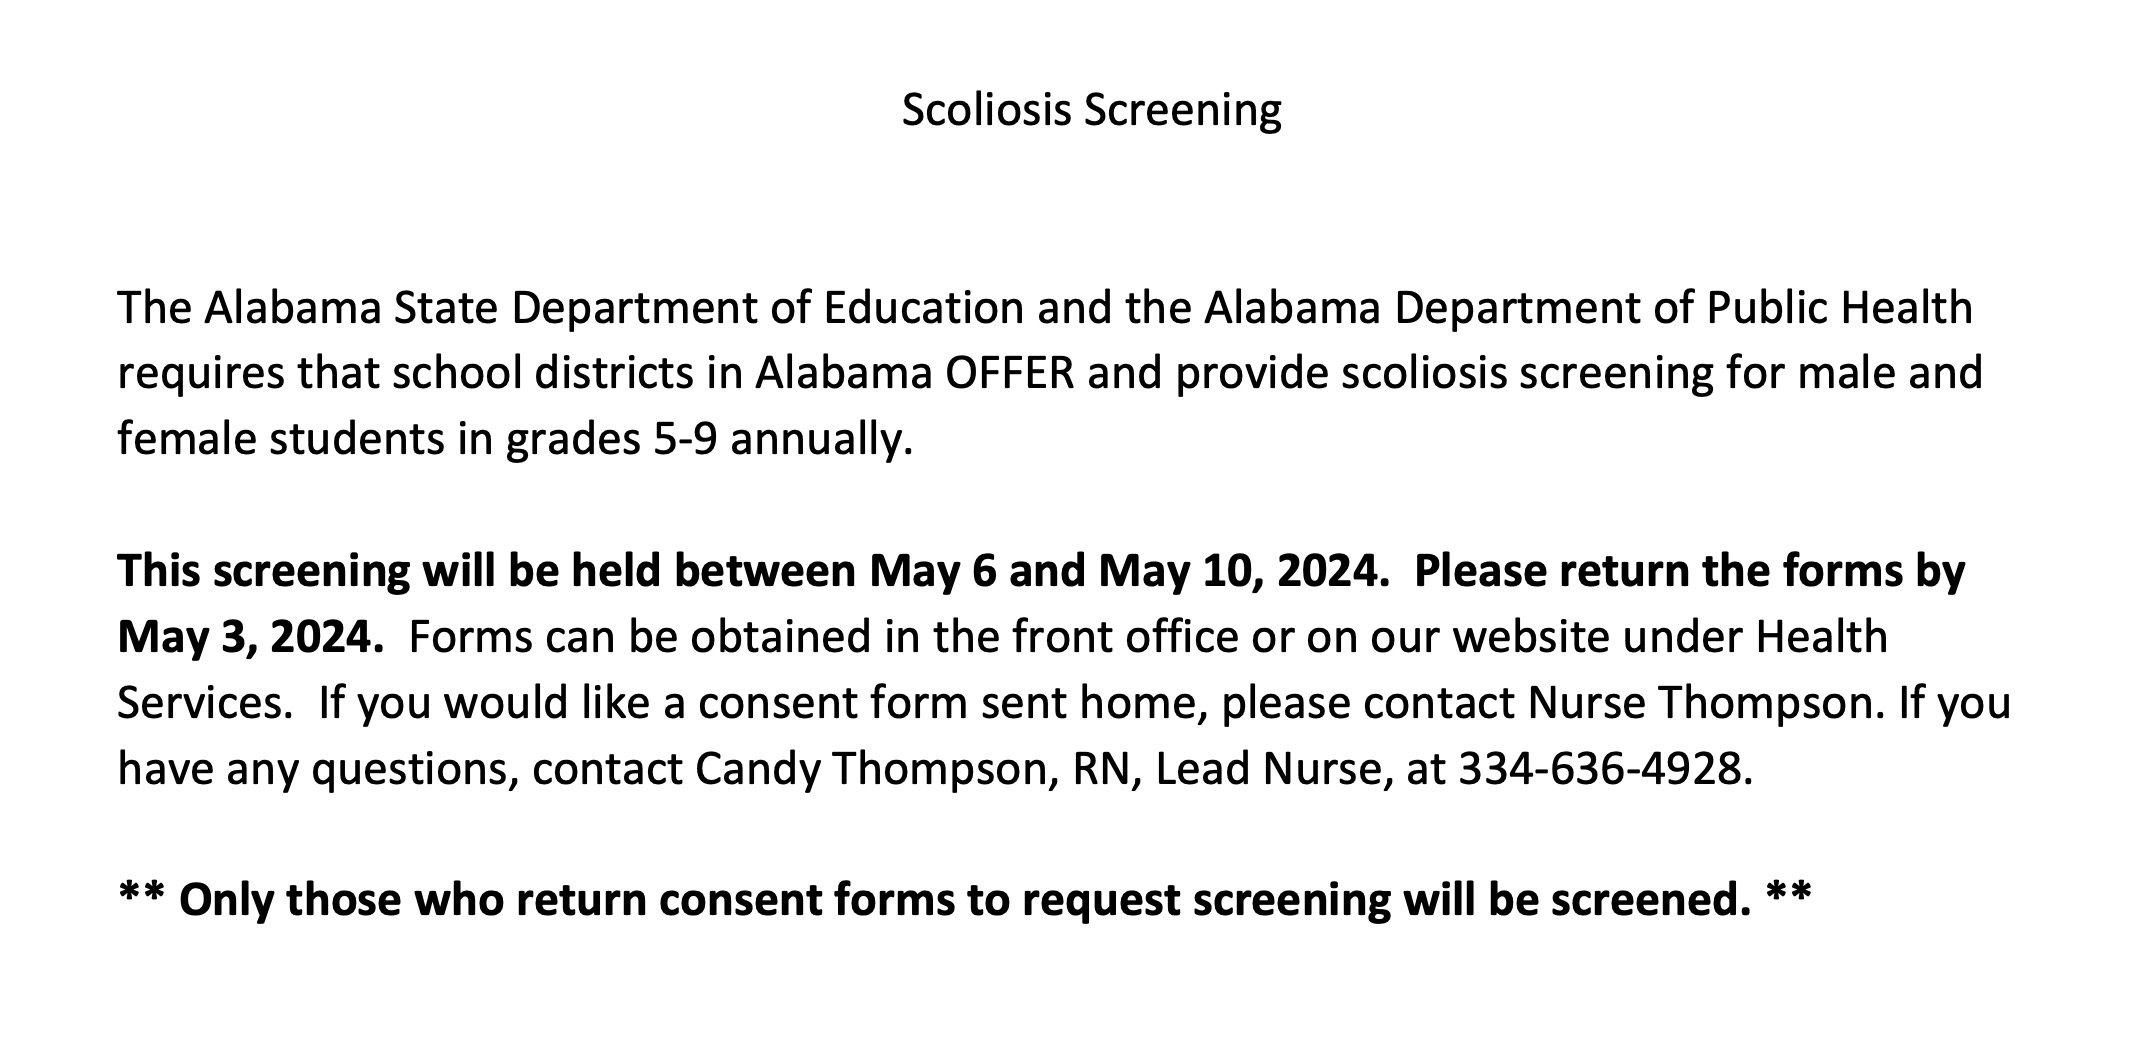 Scoliosis screening 4-19-24